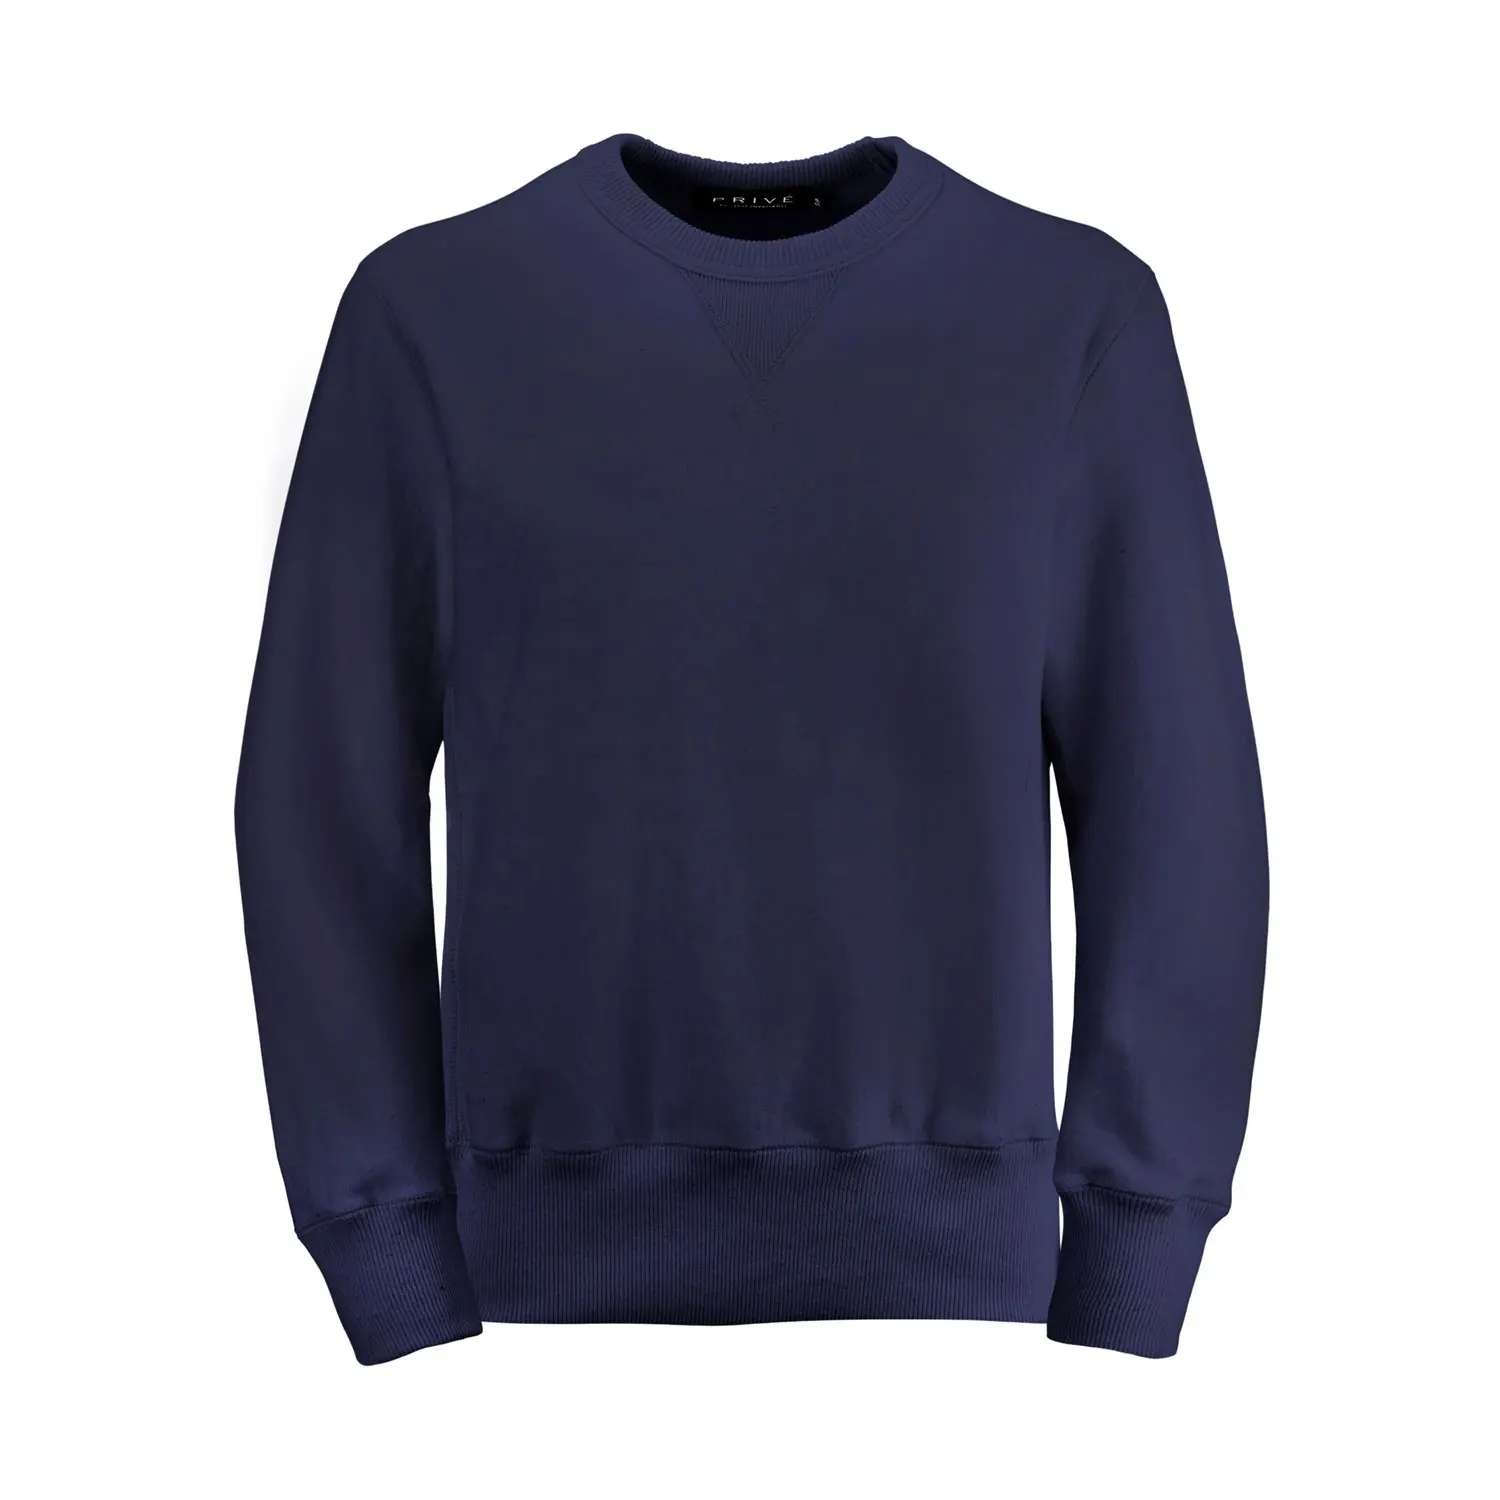 Wholesale Plain Long Sleeve T Shirts For Men Navy Blue Solid Sweatshirts For Men Organic Cotton Blank Shirts New Men's Fashion